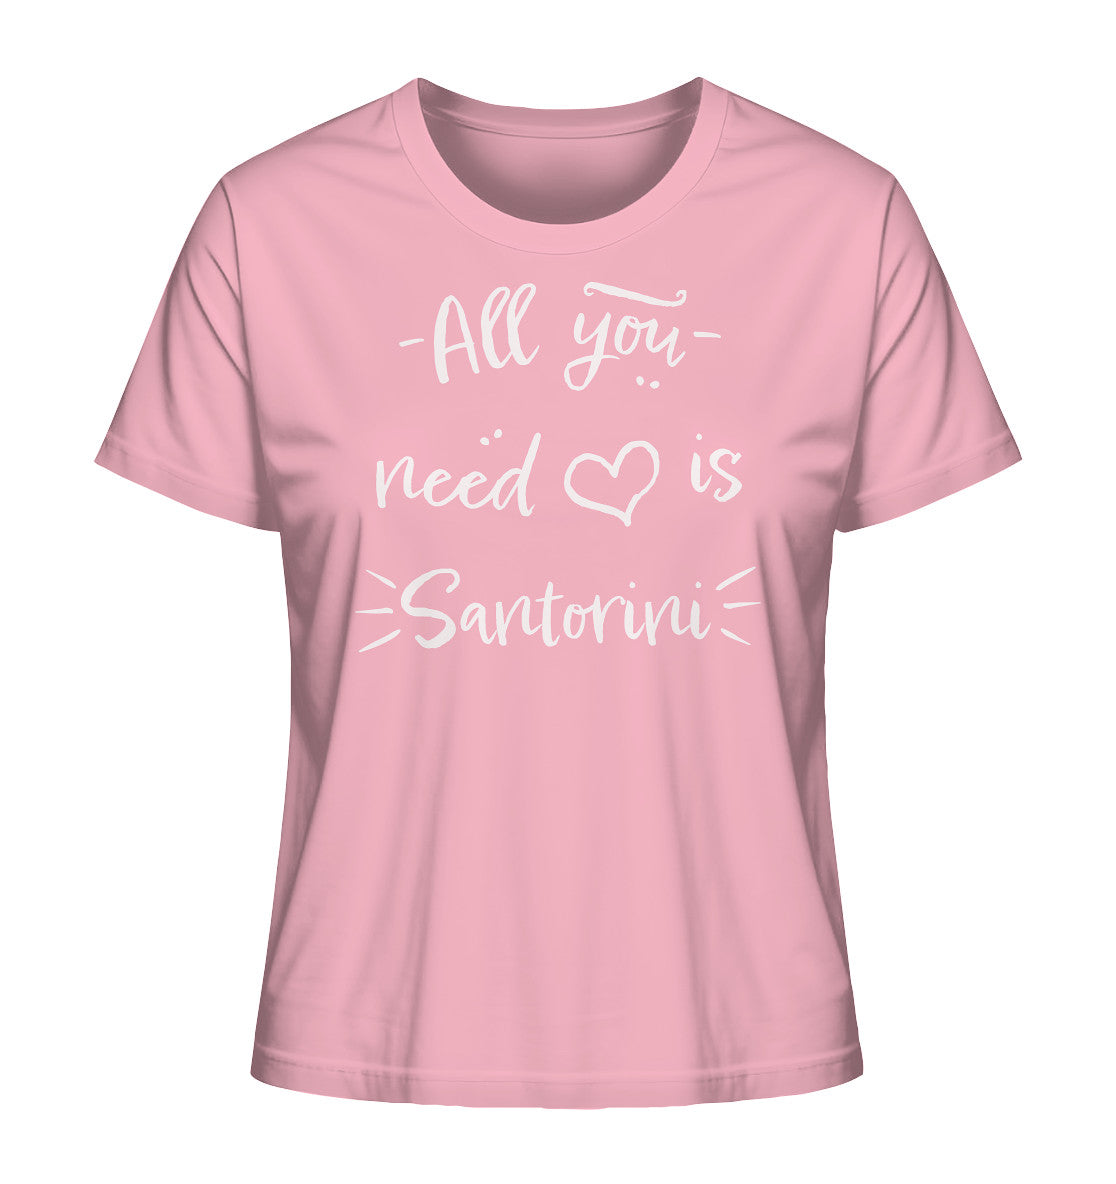 All you need is Santorini - Ladies Organic Shirt